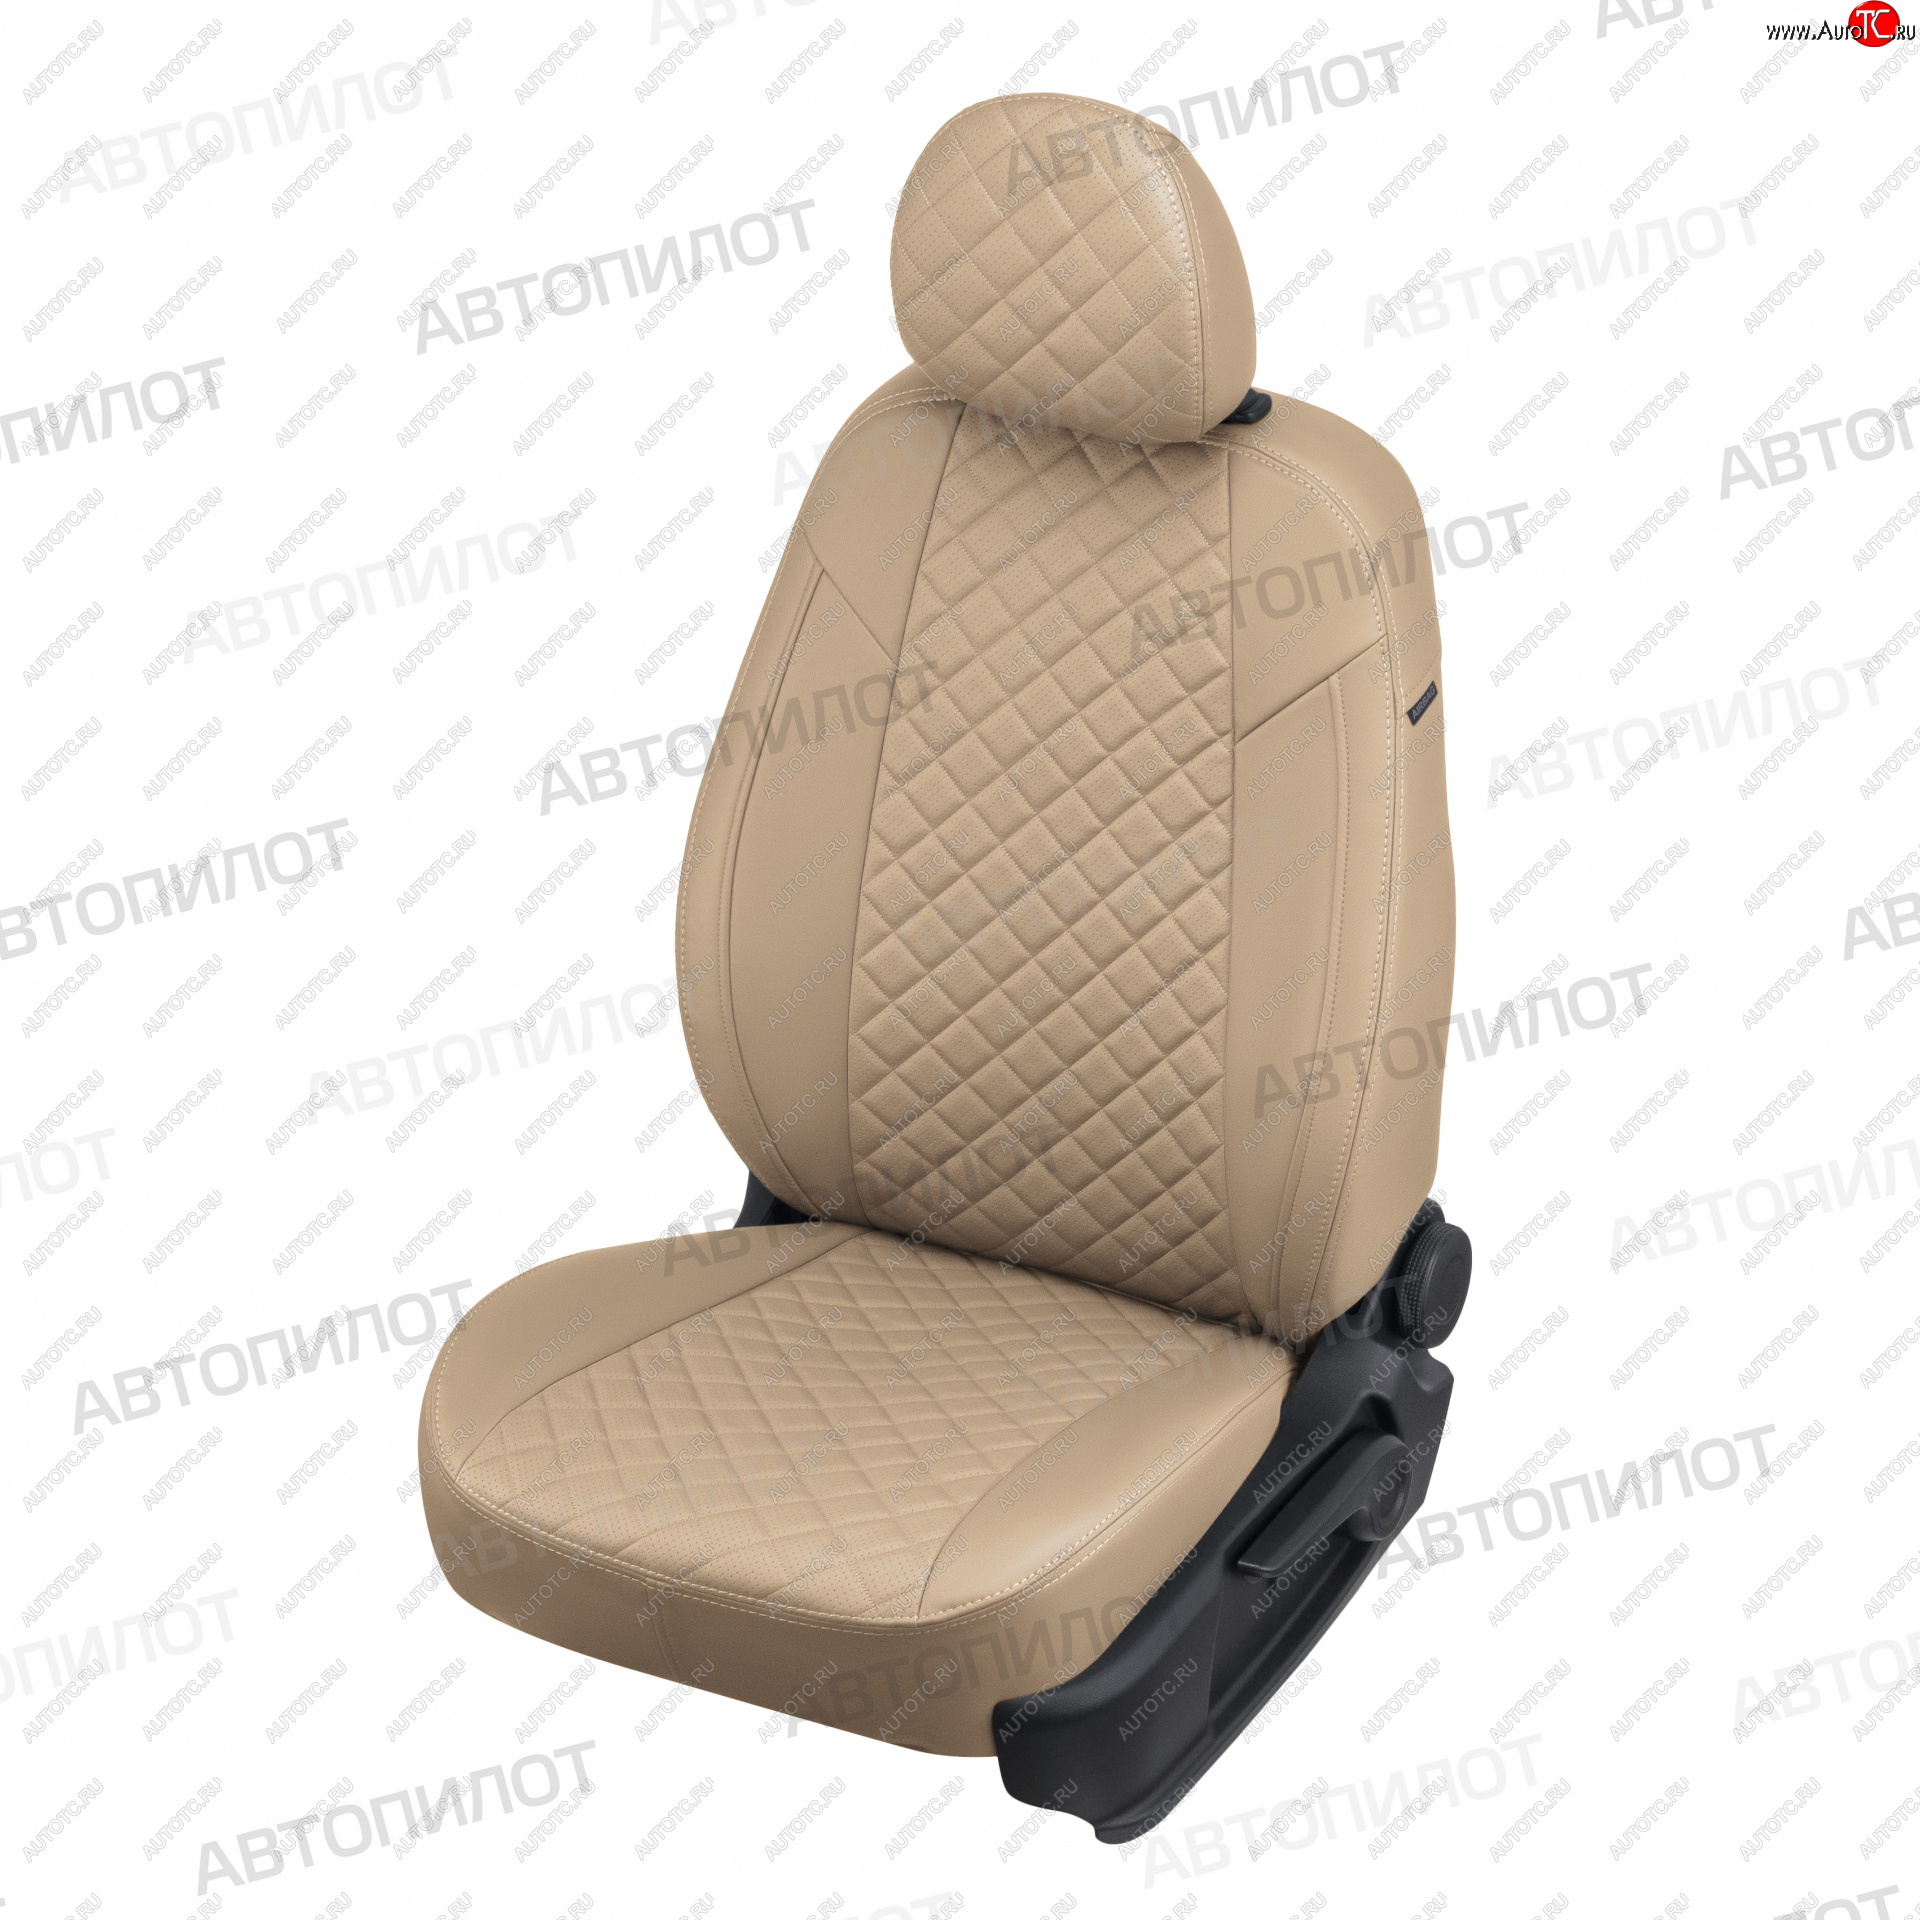 8 899 р. Чехлы сидений (3 места, экокожа) Автопилот Ромб  Ford Transit  3 (2006-2014) (темно-бежевый)